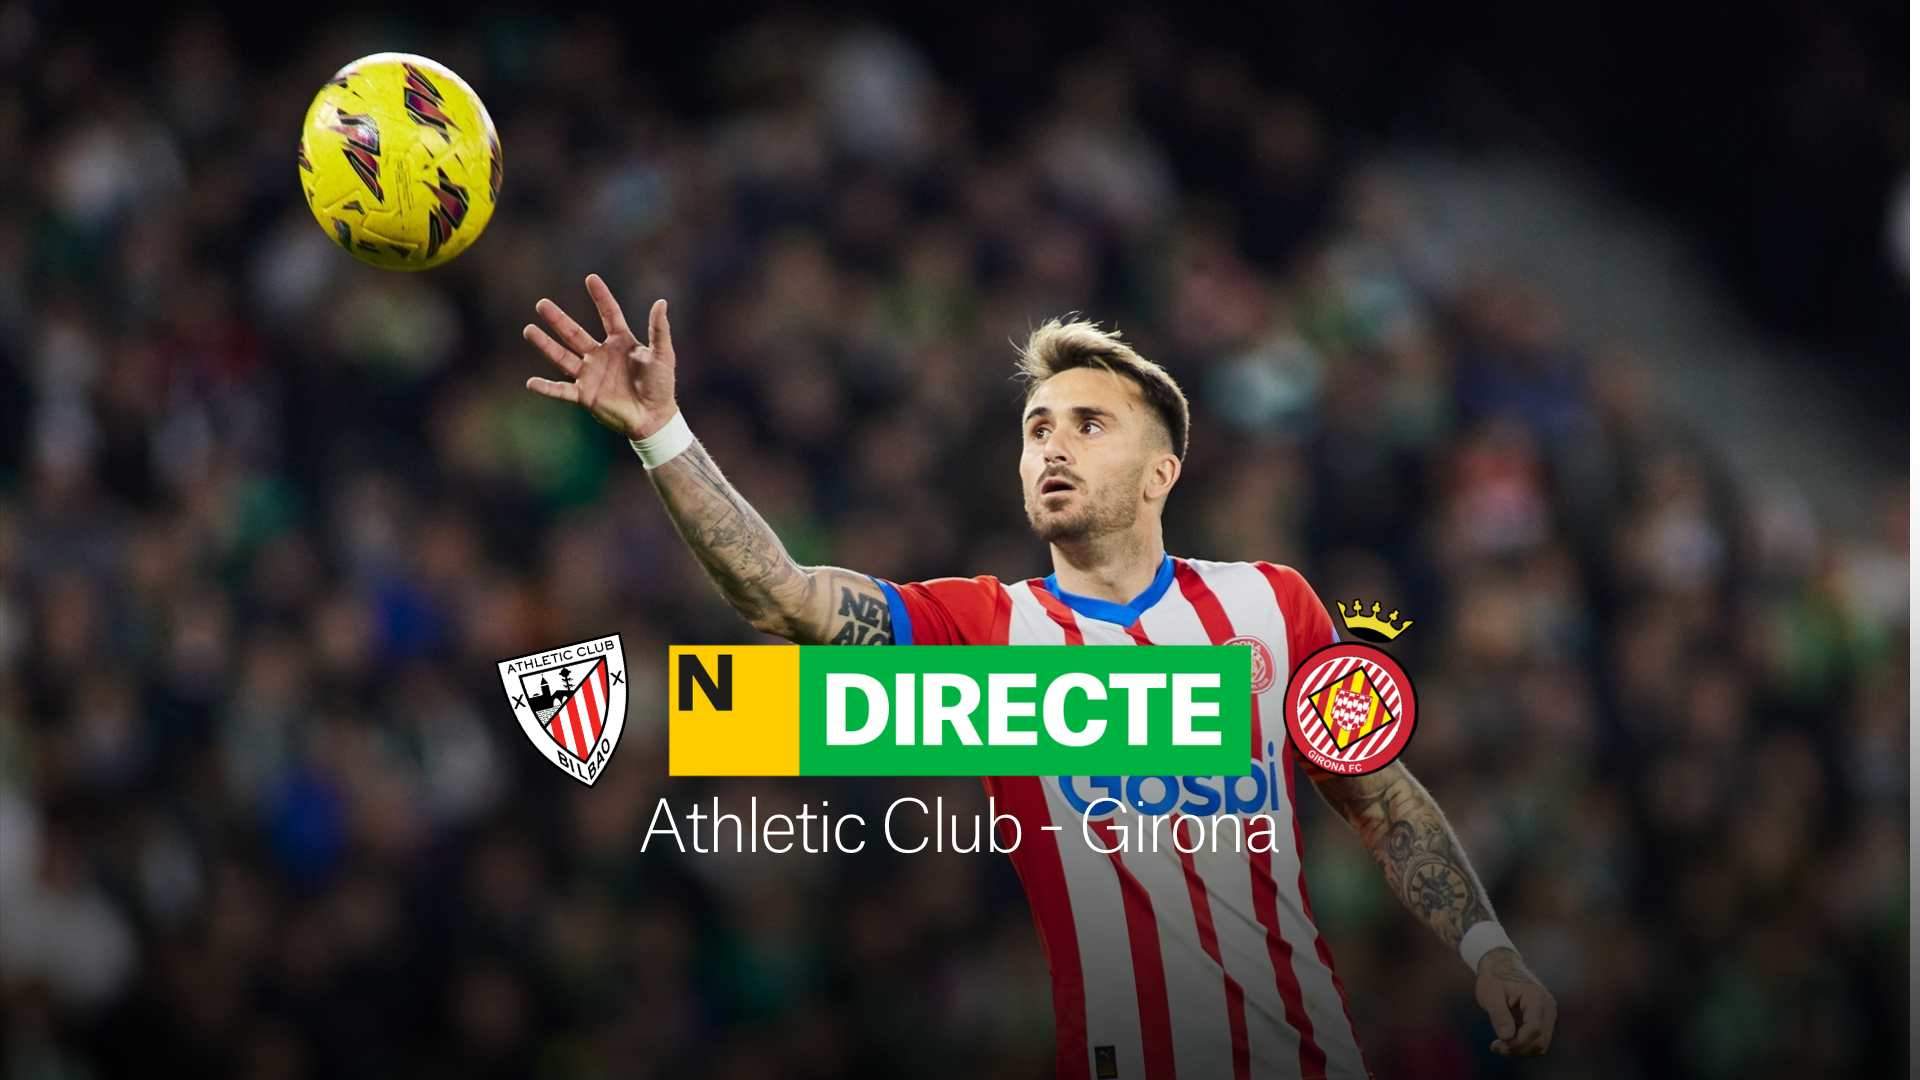 Athletic Club - Girona de LaLiga EA Sports, DIRECTE | Resultat, resum i gols